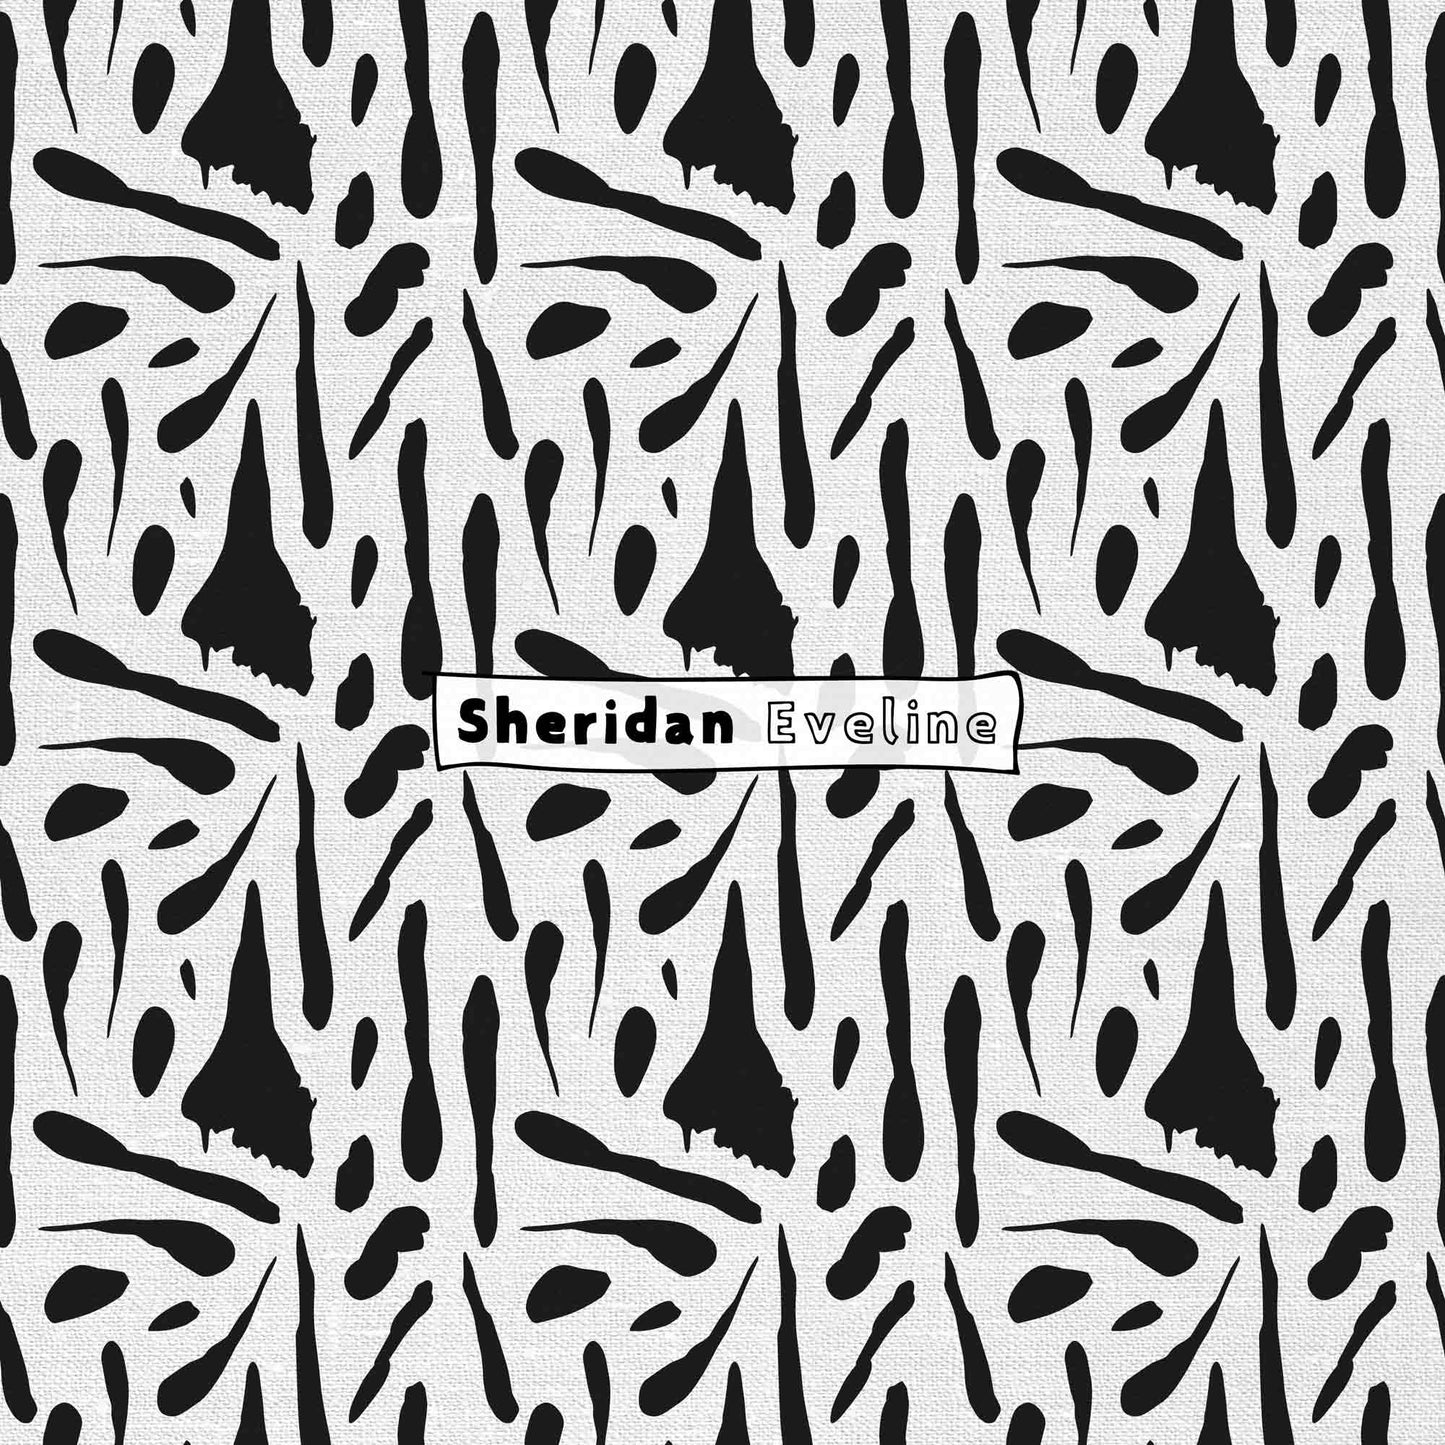 Sheridan Eveline - Brisbane Surface Pattern Designer - Black & White Pattern - Tribe Face Mel